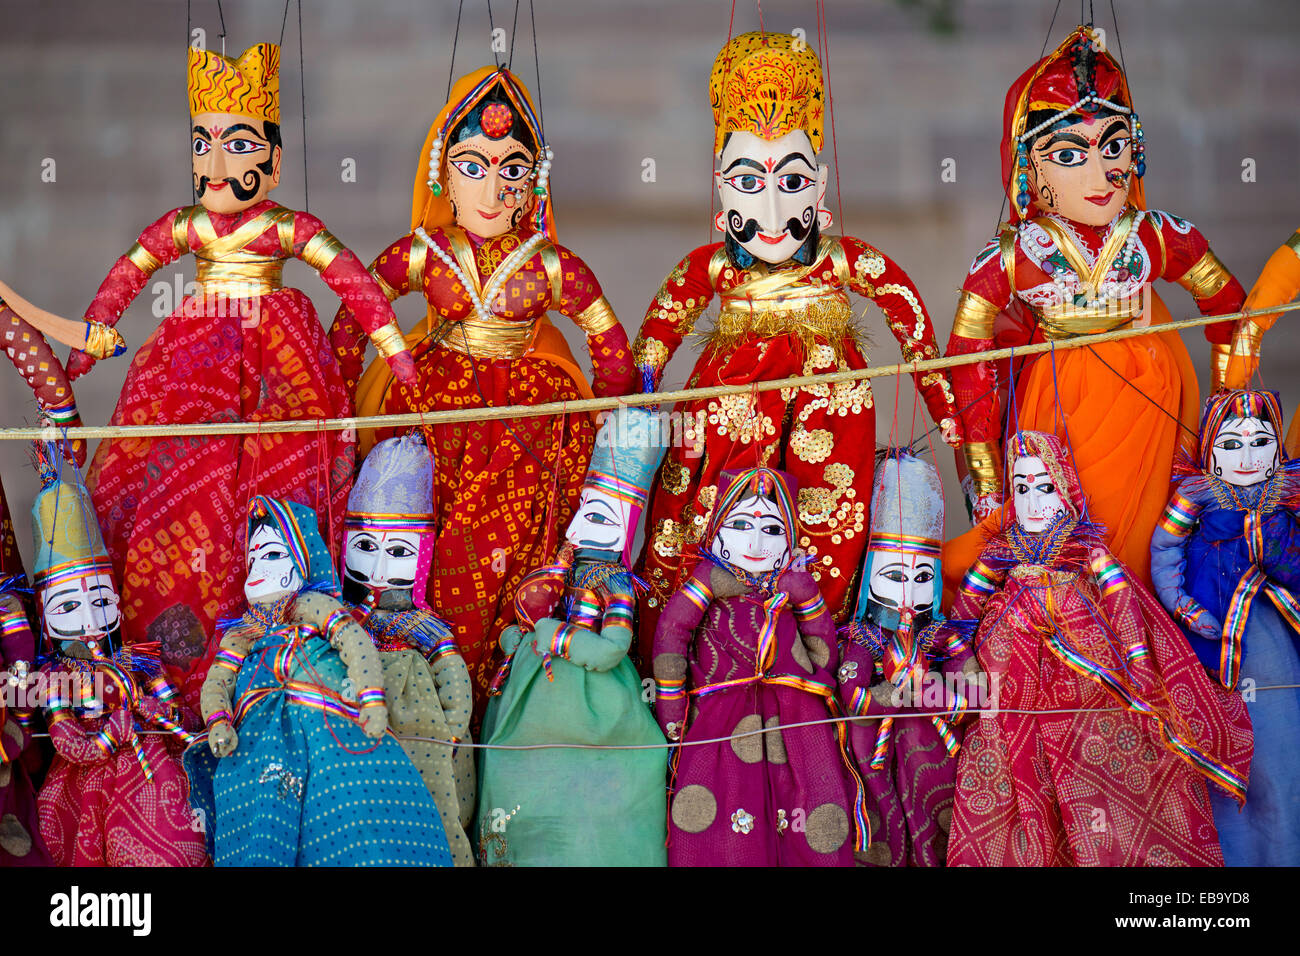 Marionettes, traditional crafts, Jodhpur, Rajasthan, India Stock Photo